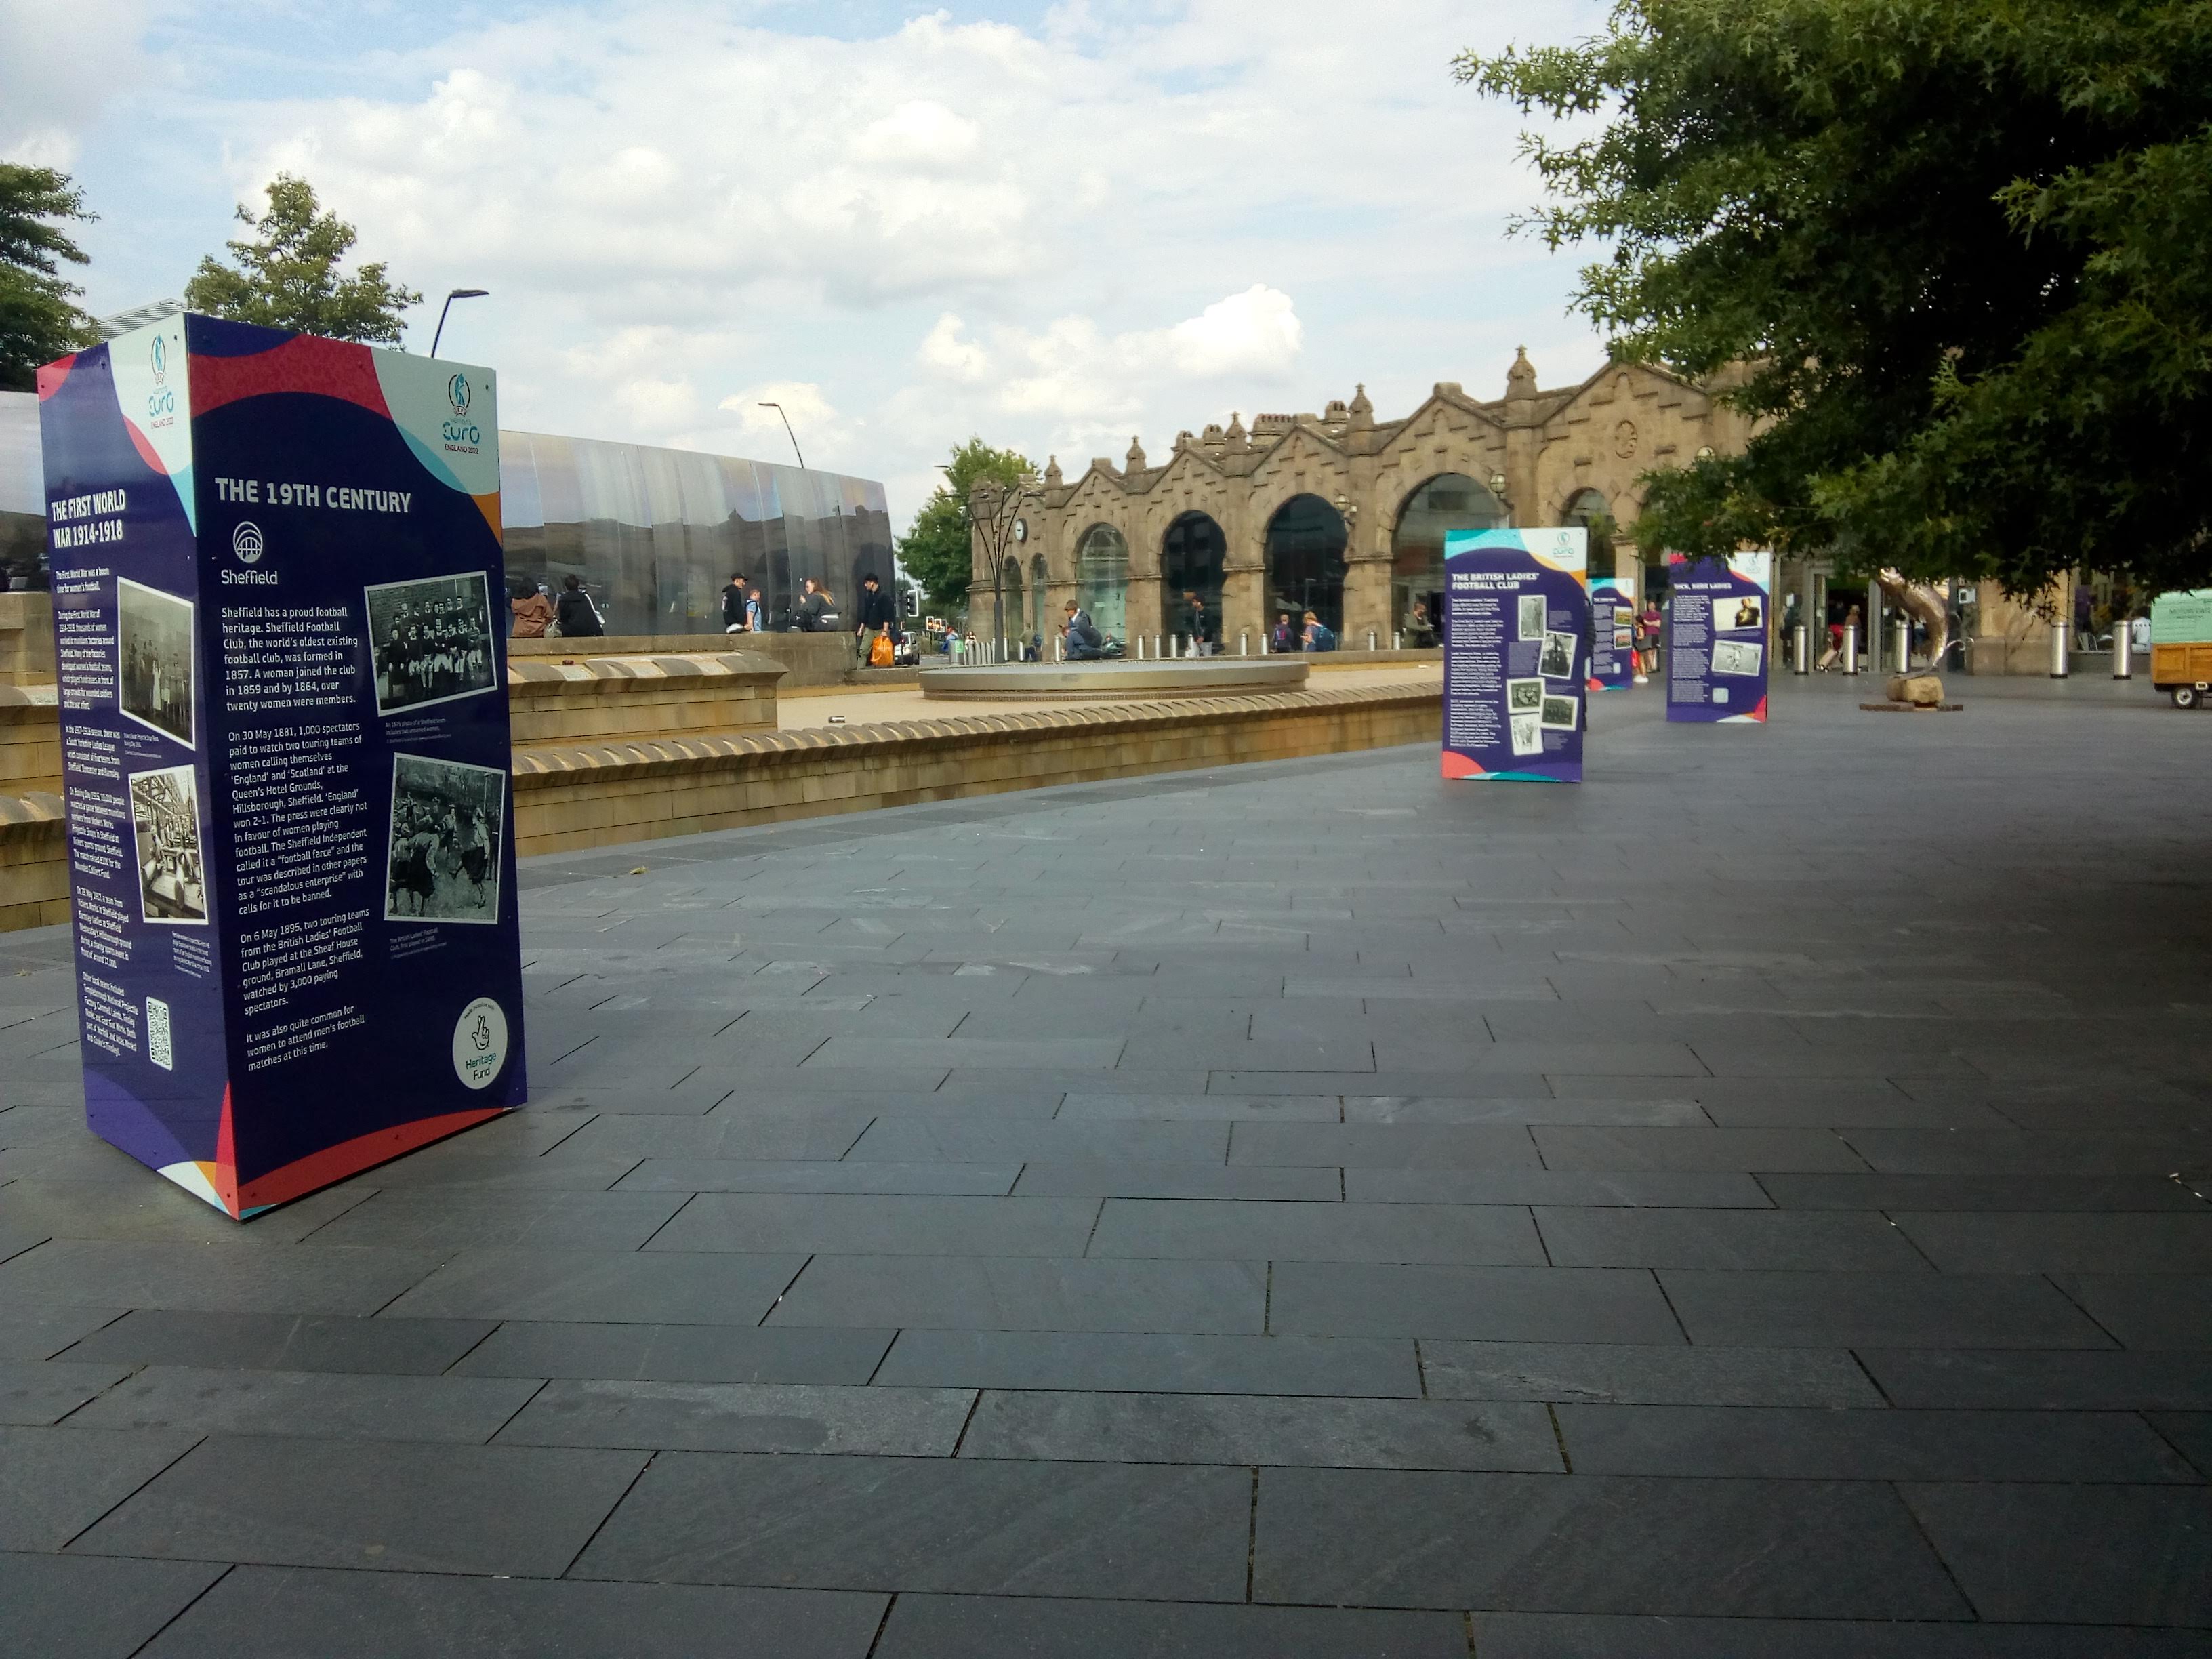 Four monoliths outside Sheffield station